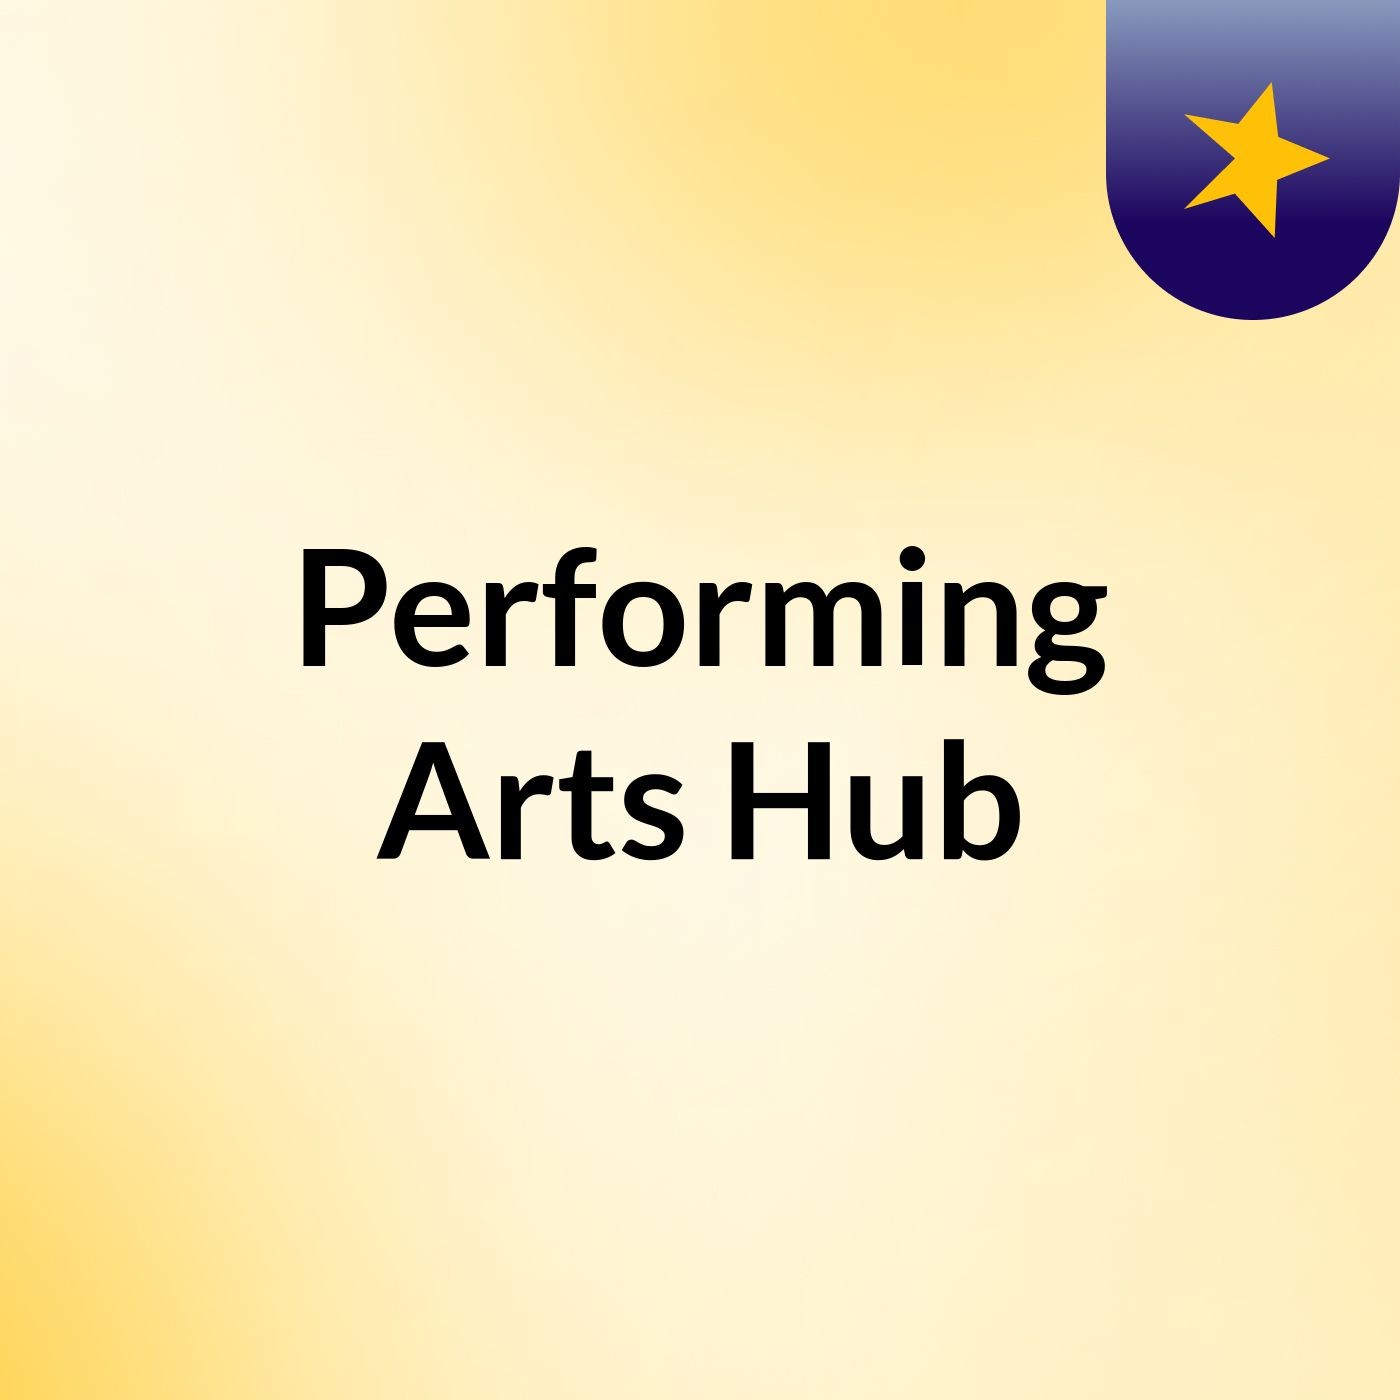 Performing Arts Hub